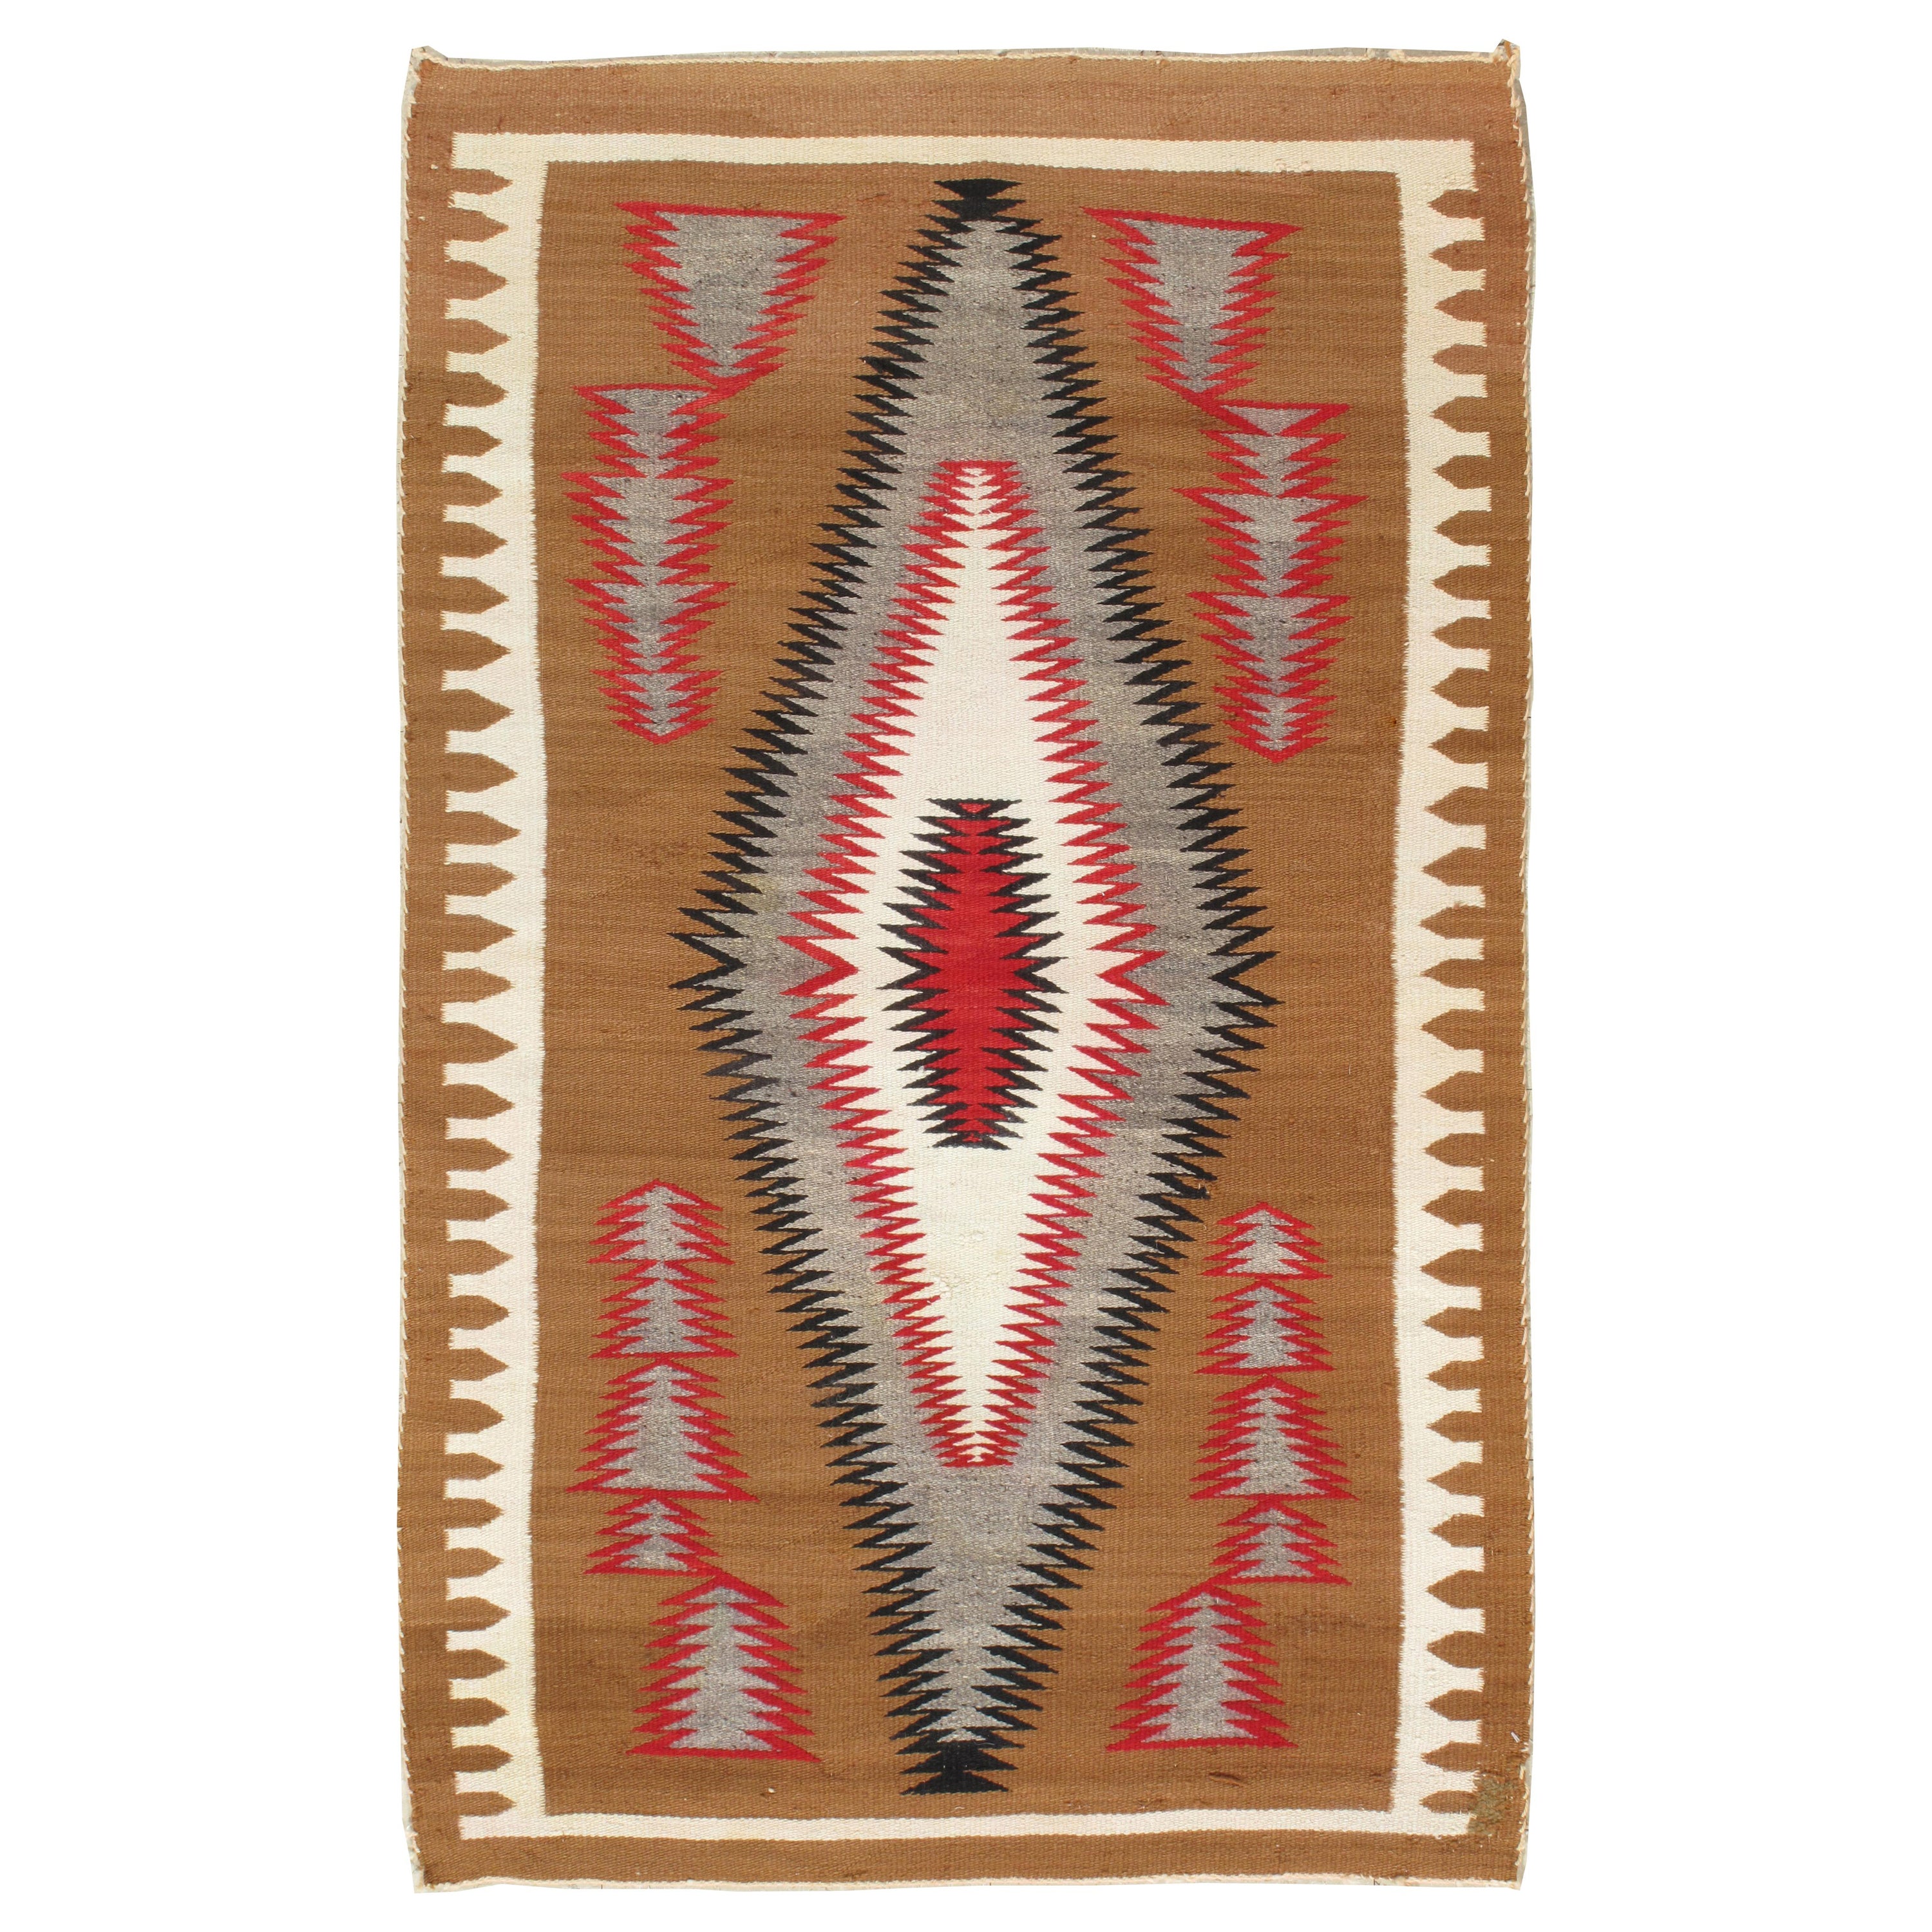 Antique Navajo Carpet, Storm Pattern Rug, Handmade Wool Rug, Gray, Red and Tan